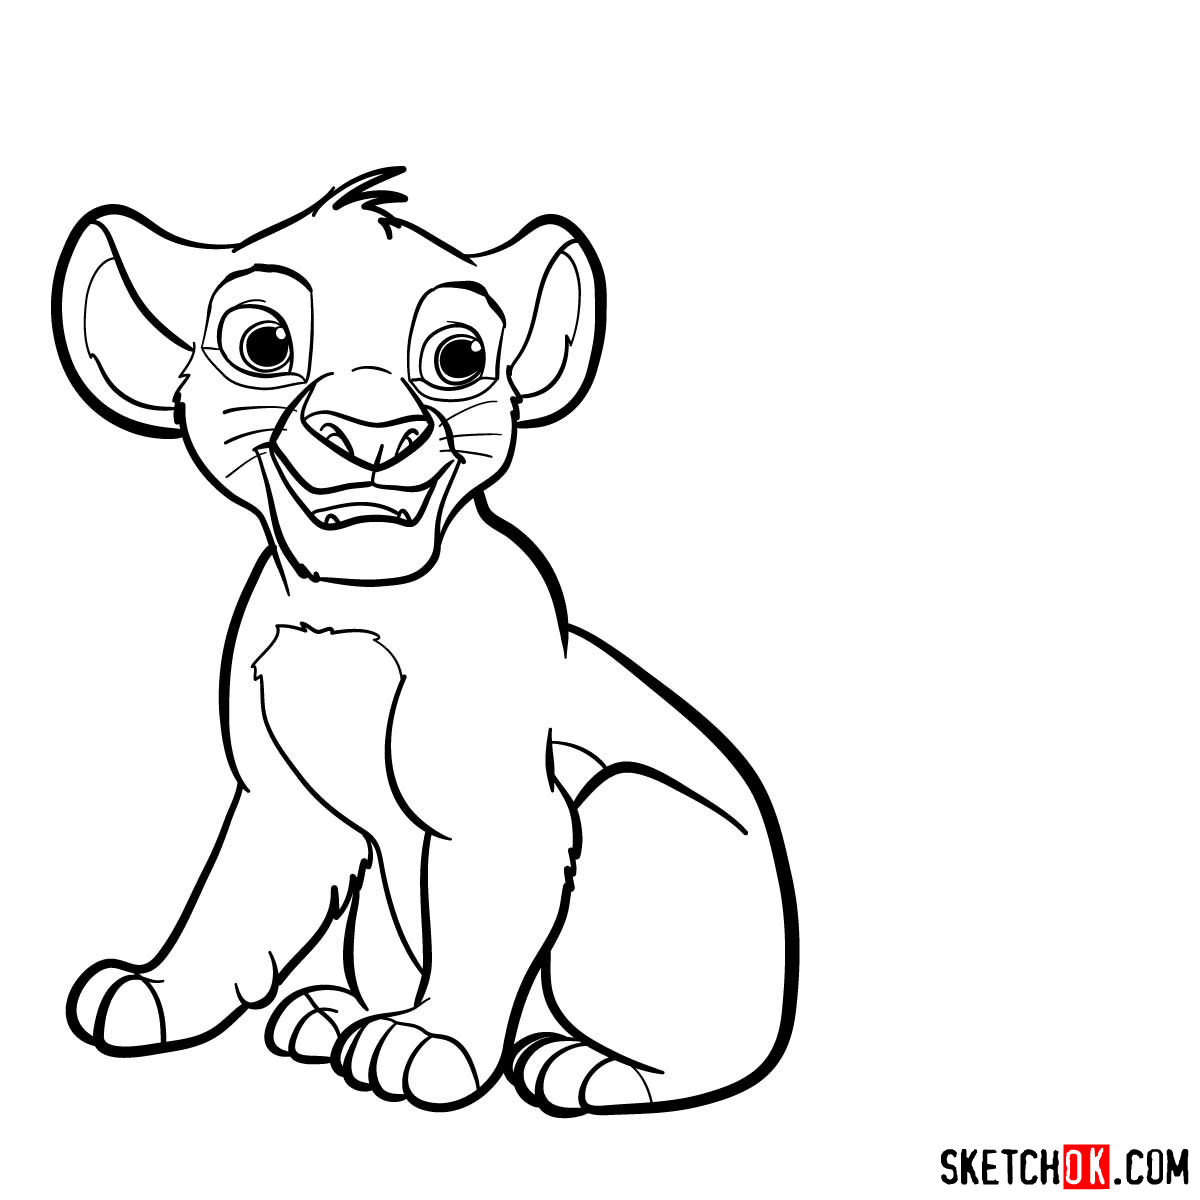 BBC - Blast Art & Design - The Lion King: Simba